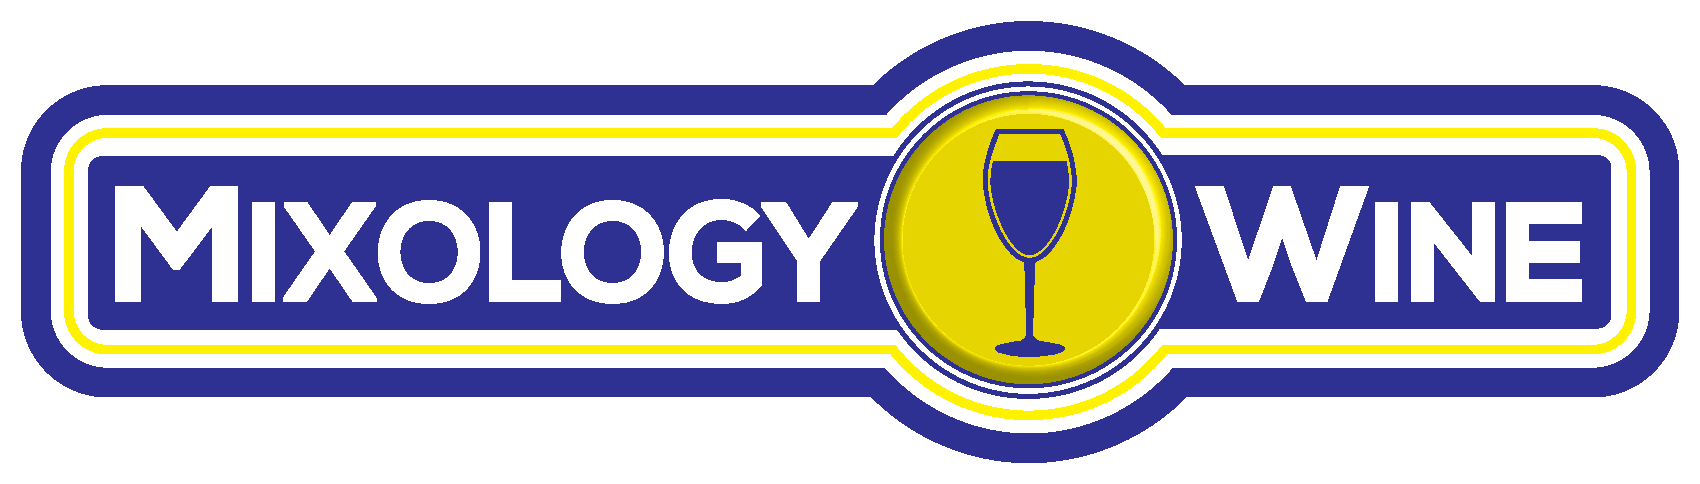 Mixology Wine